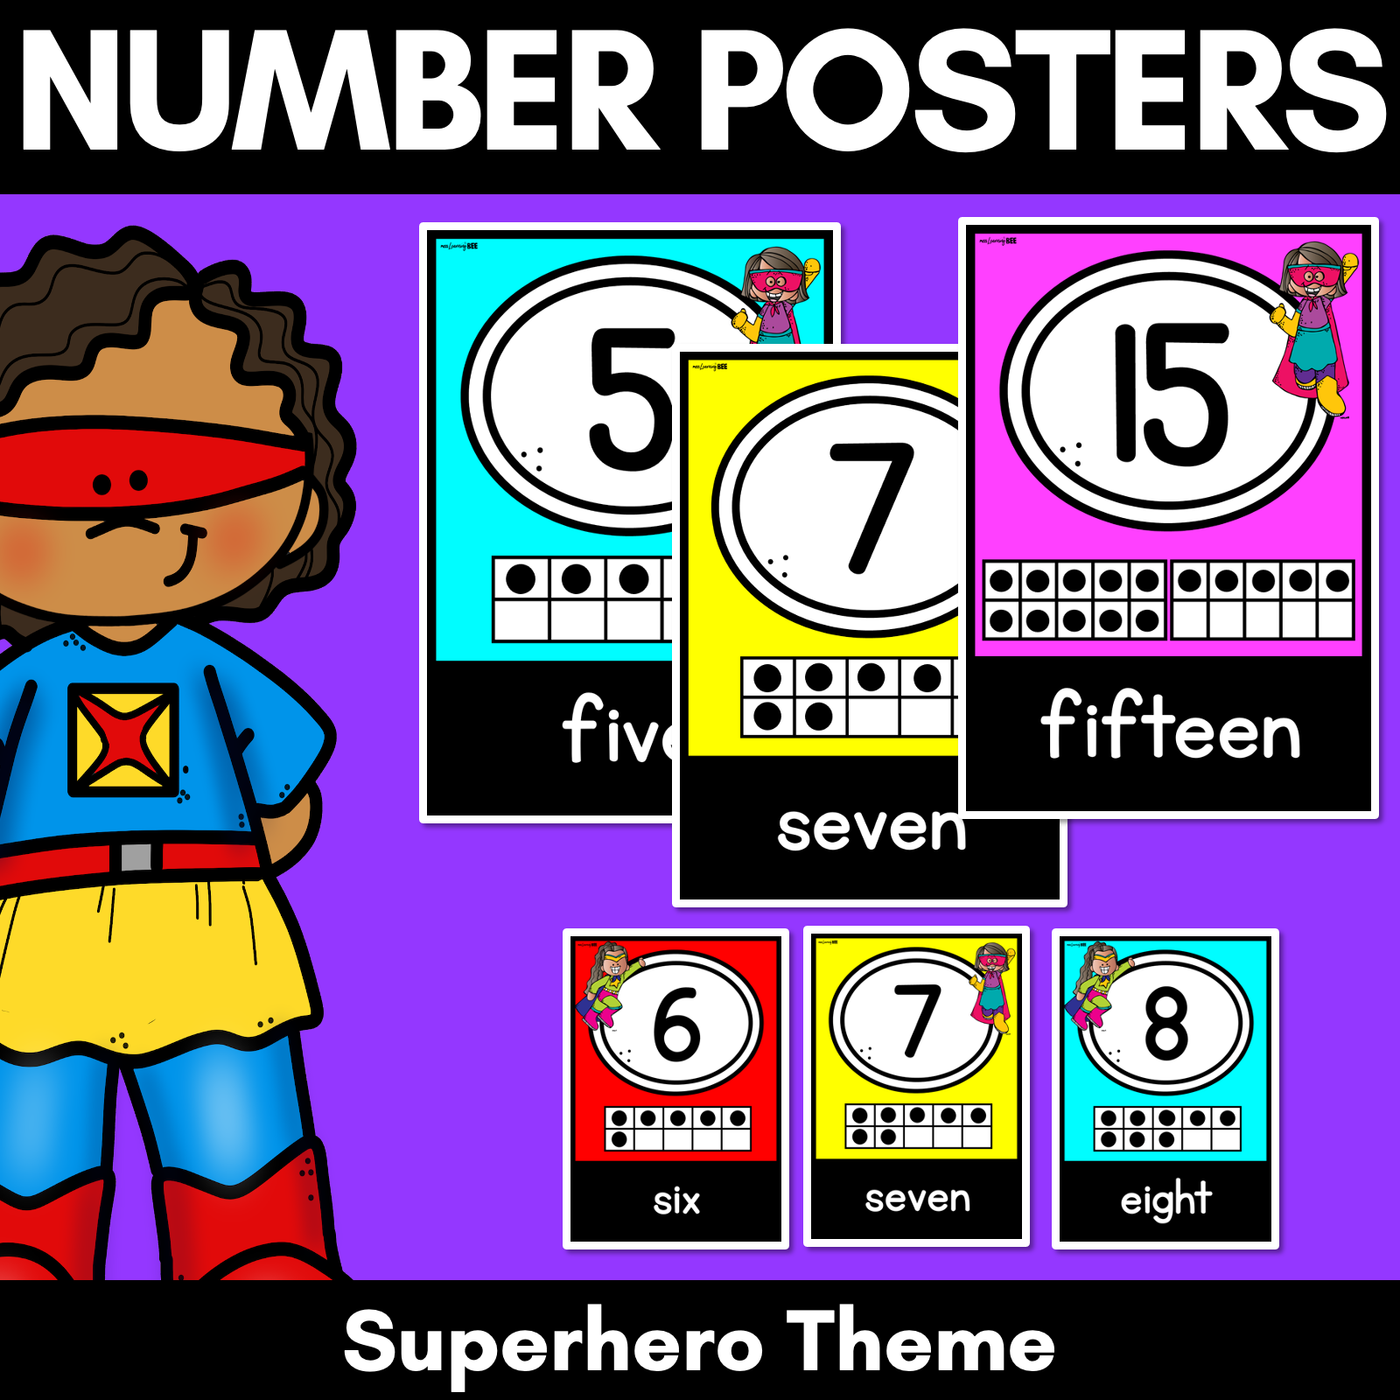 SUPERHERO THEME Number Posters